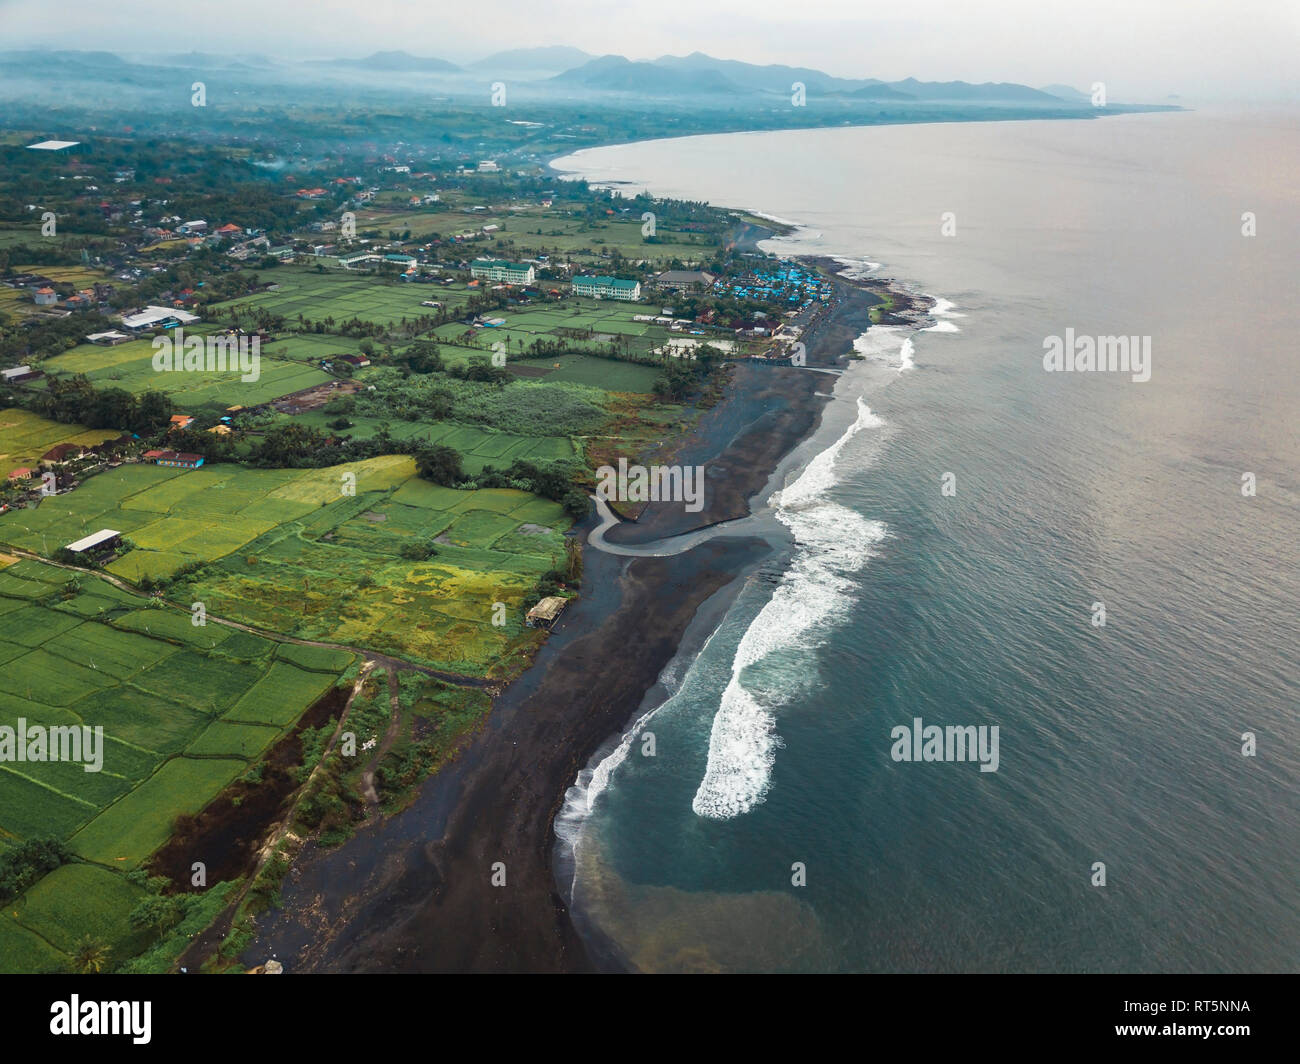 Indonesia, Bali, Aerial view of Keramas beach Stock Photo - Alamy